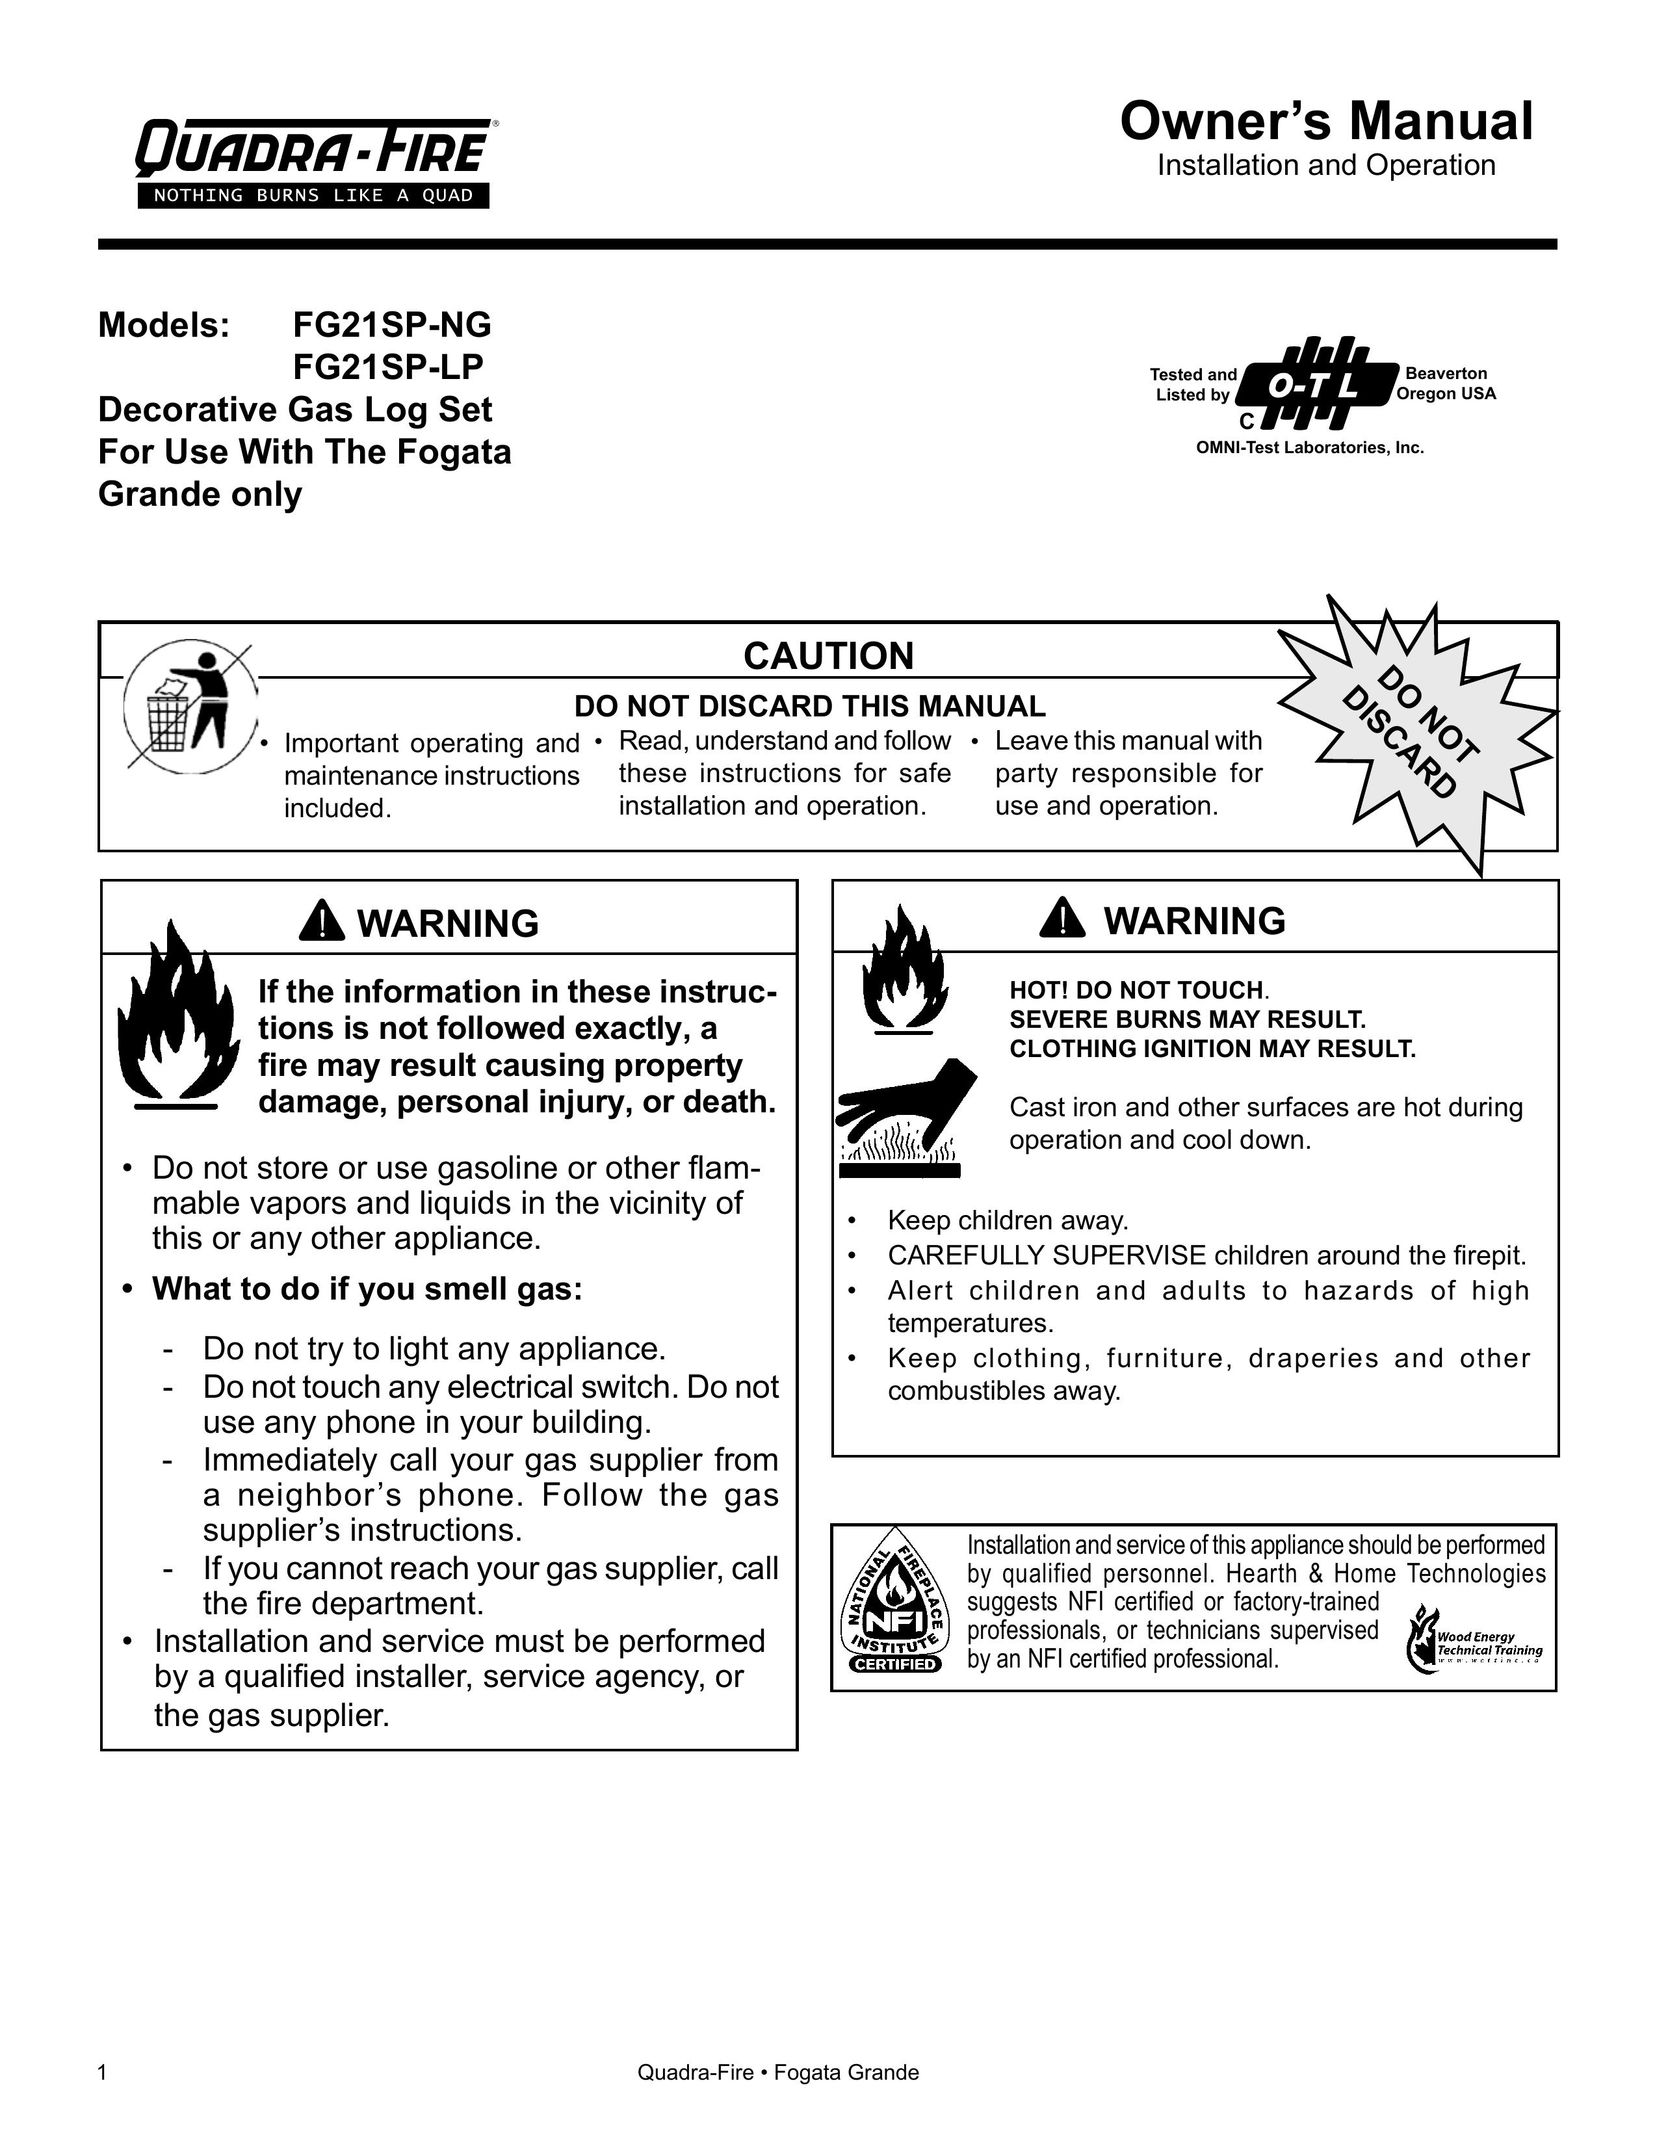 Quadra-Fire FG21SP-LP Indoor Fireplace User Manual